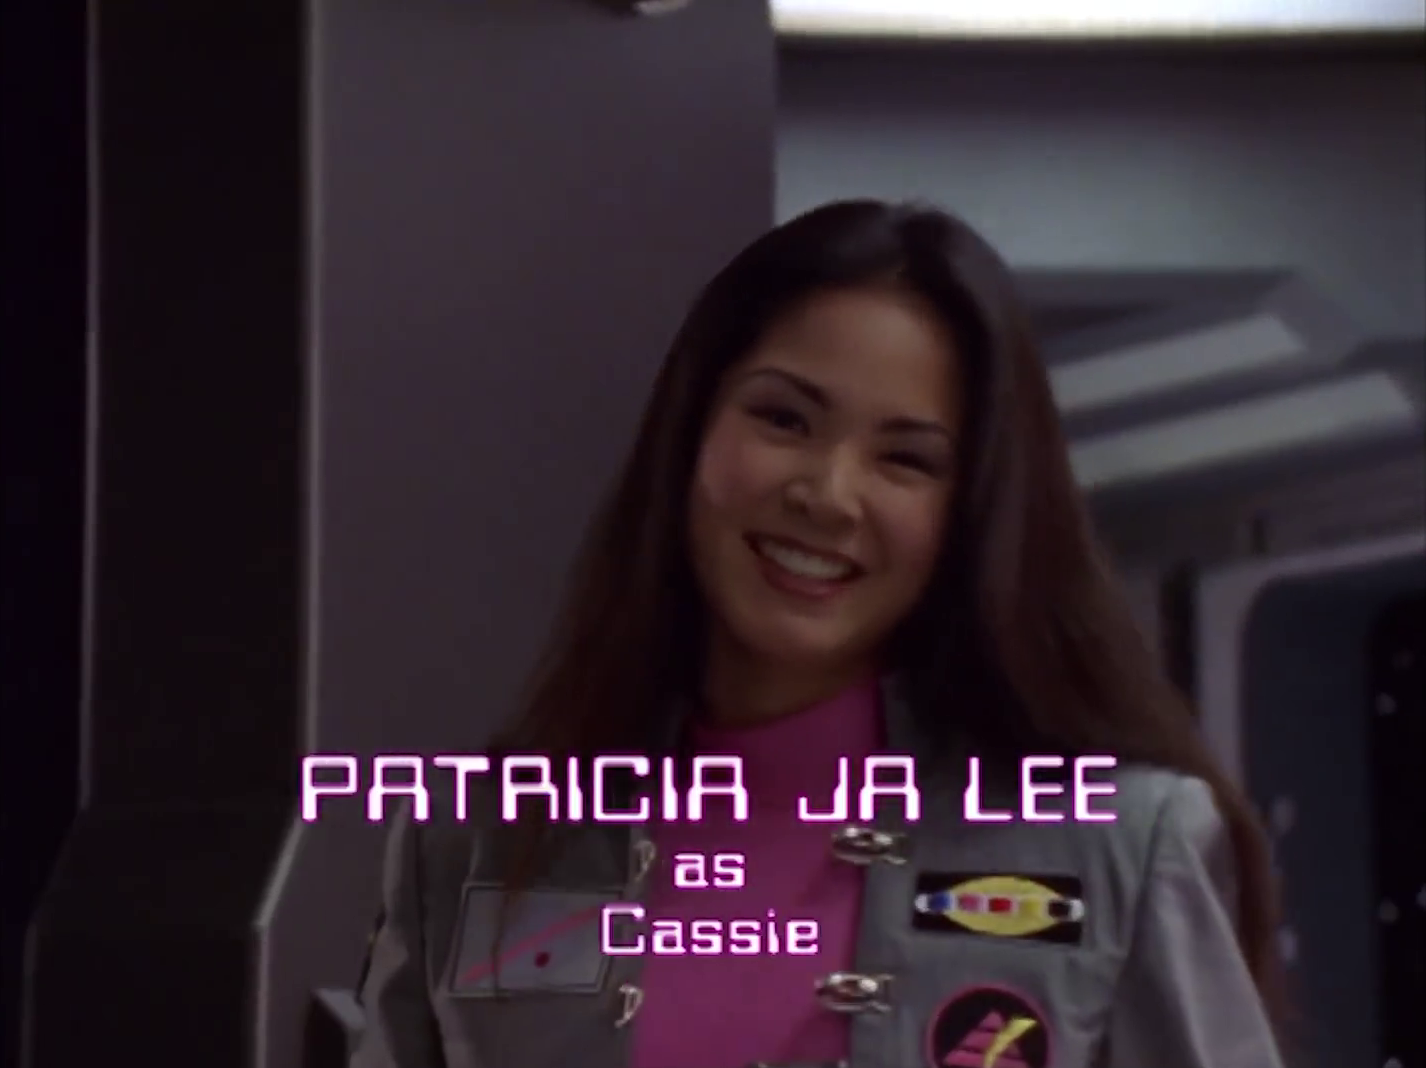 Everyone likes her. Patricia ja Lee hot.